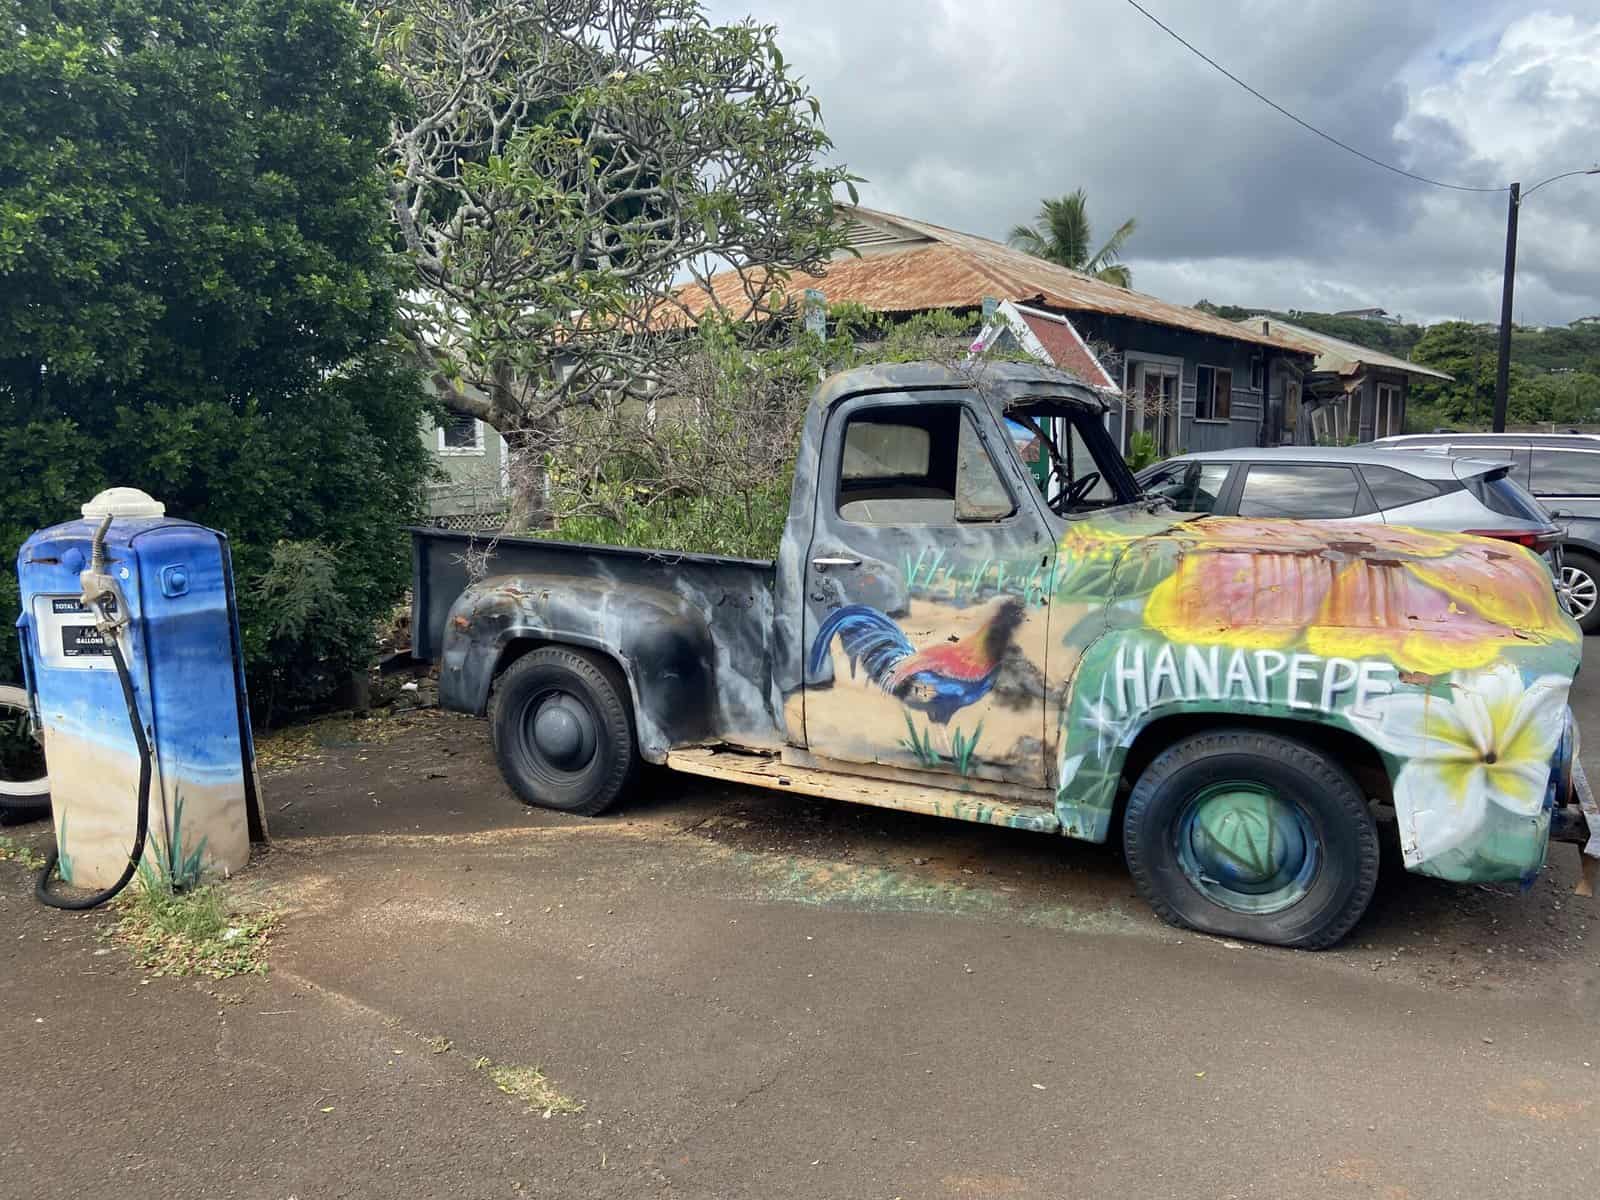 Hanapepe, "Kauai's Biggest Little Town."